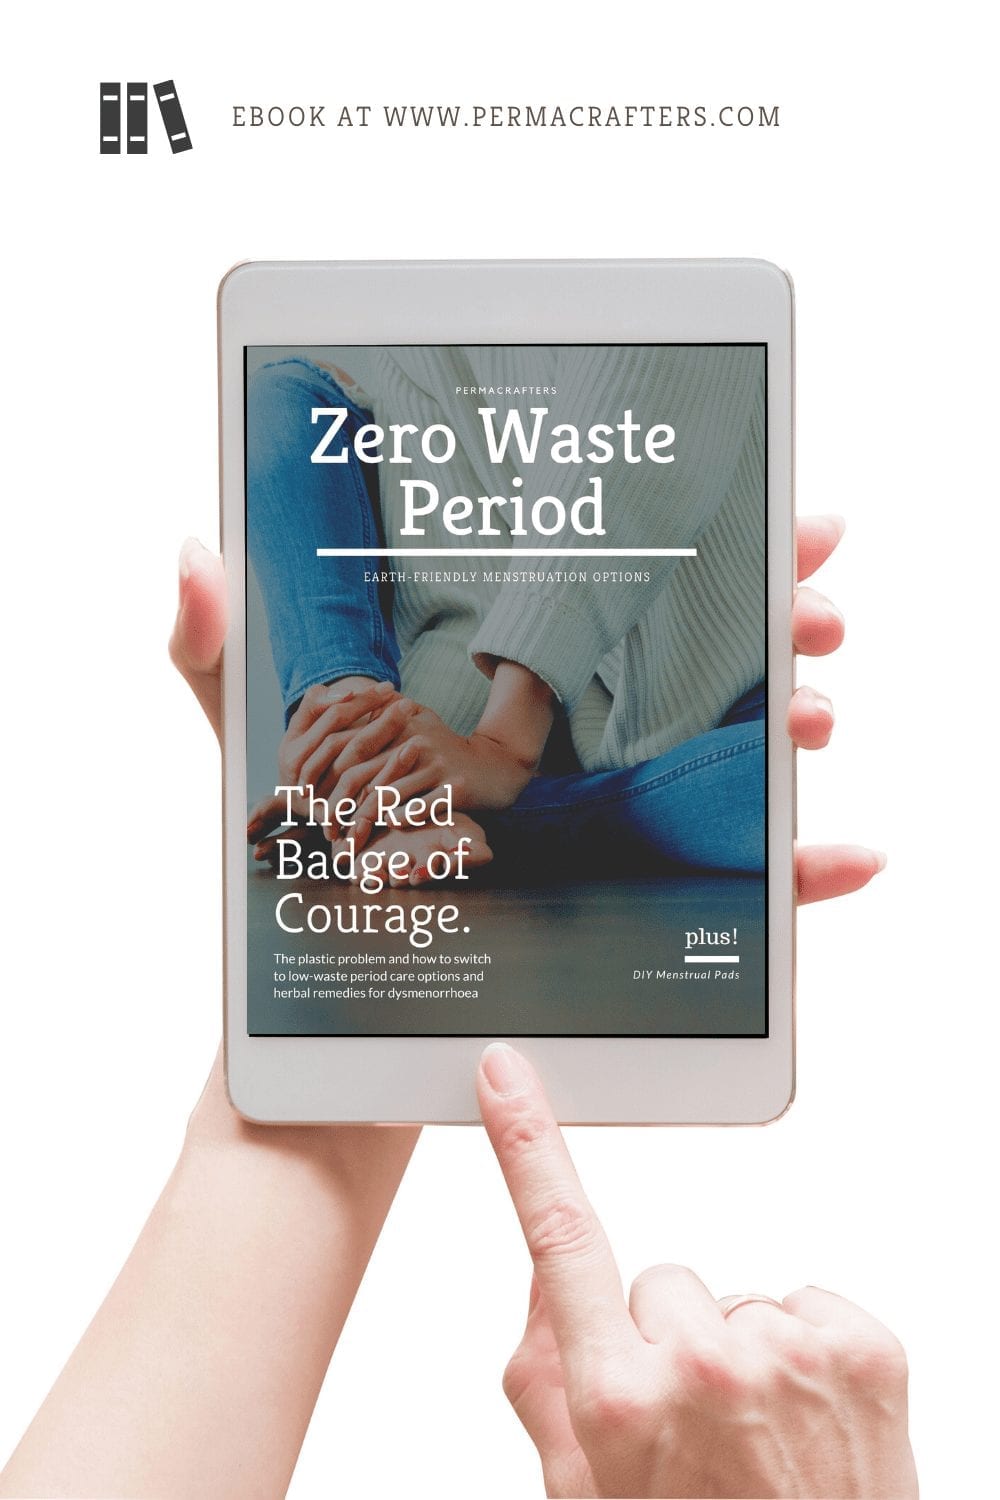 Zero Waste Period Ebook